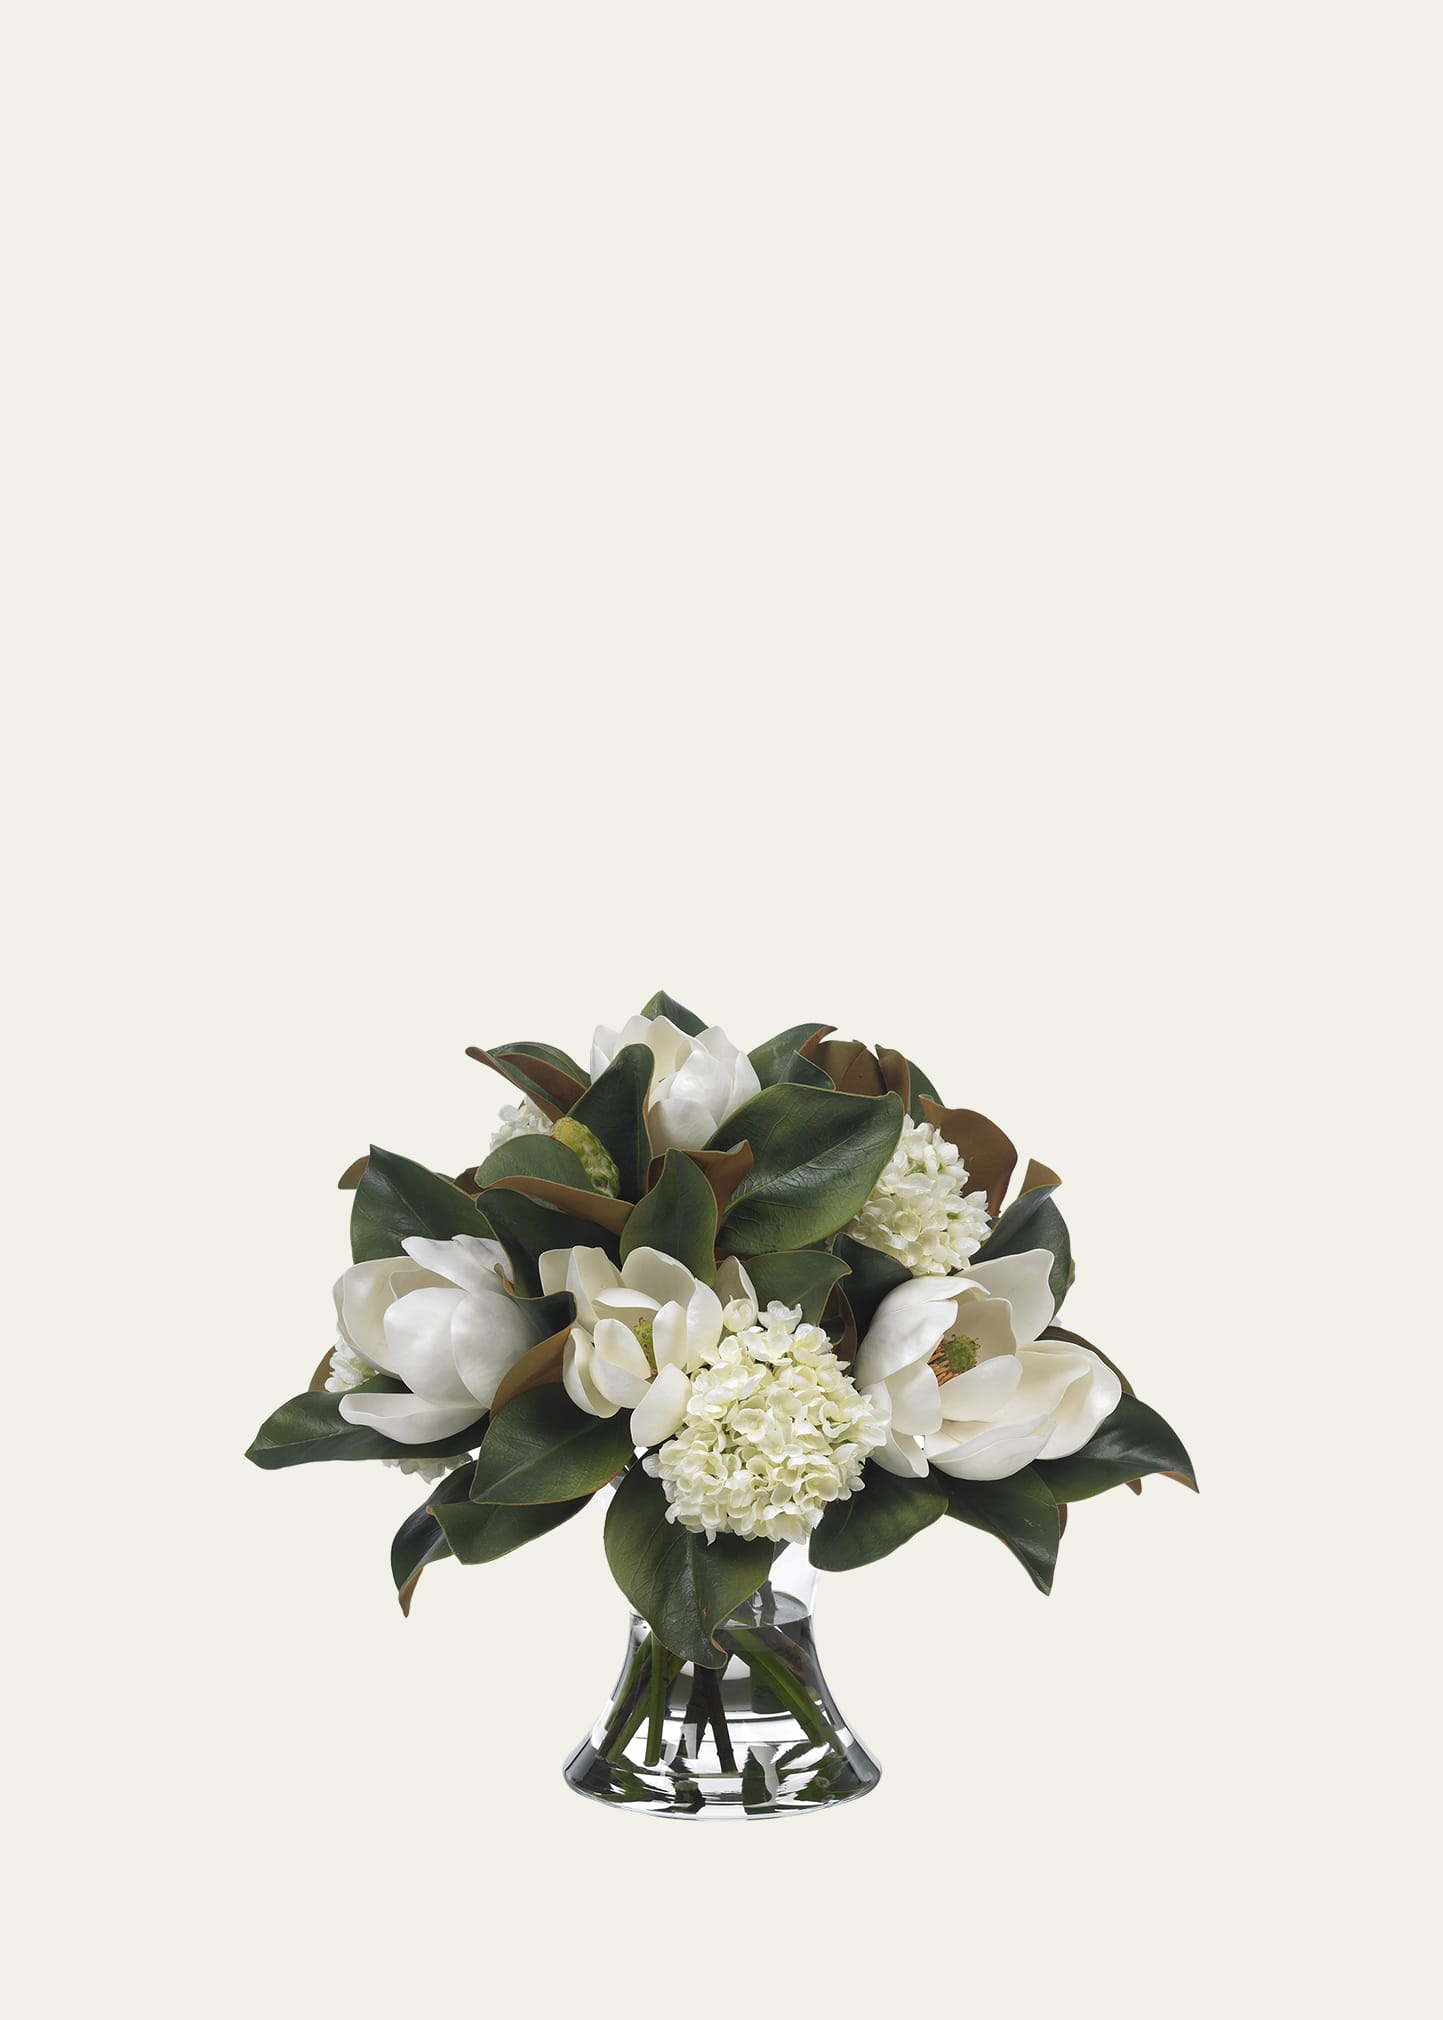 Diane James Large Magnolia & Hydrangea 18" Faux Florals In Glass Vase In Multi